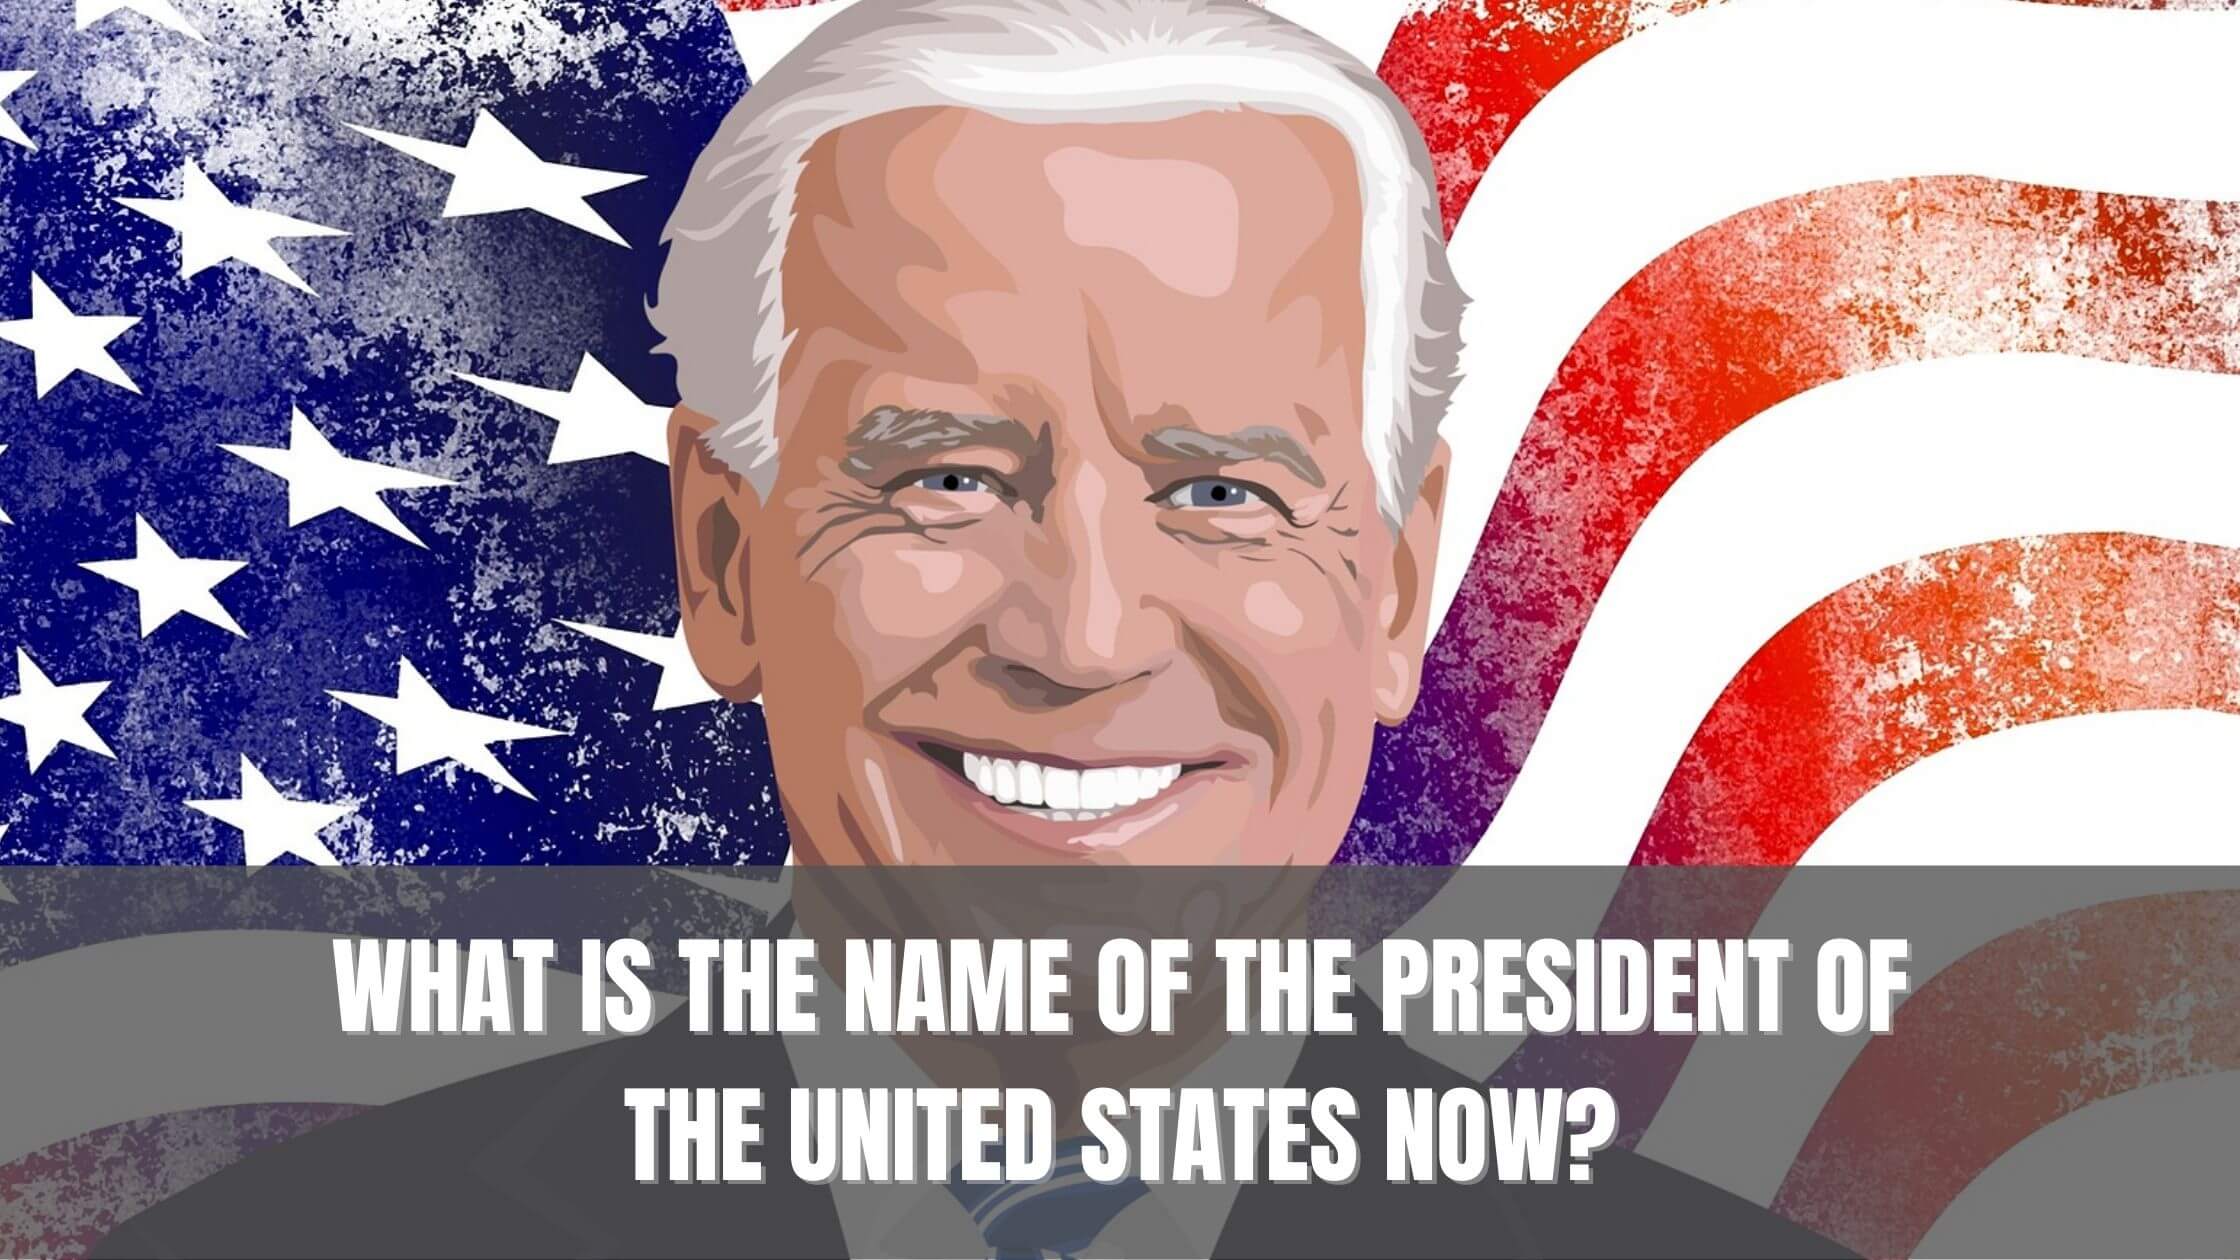 Artist's impression of Joe Biden